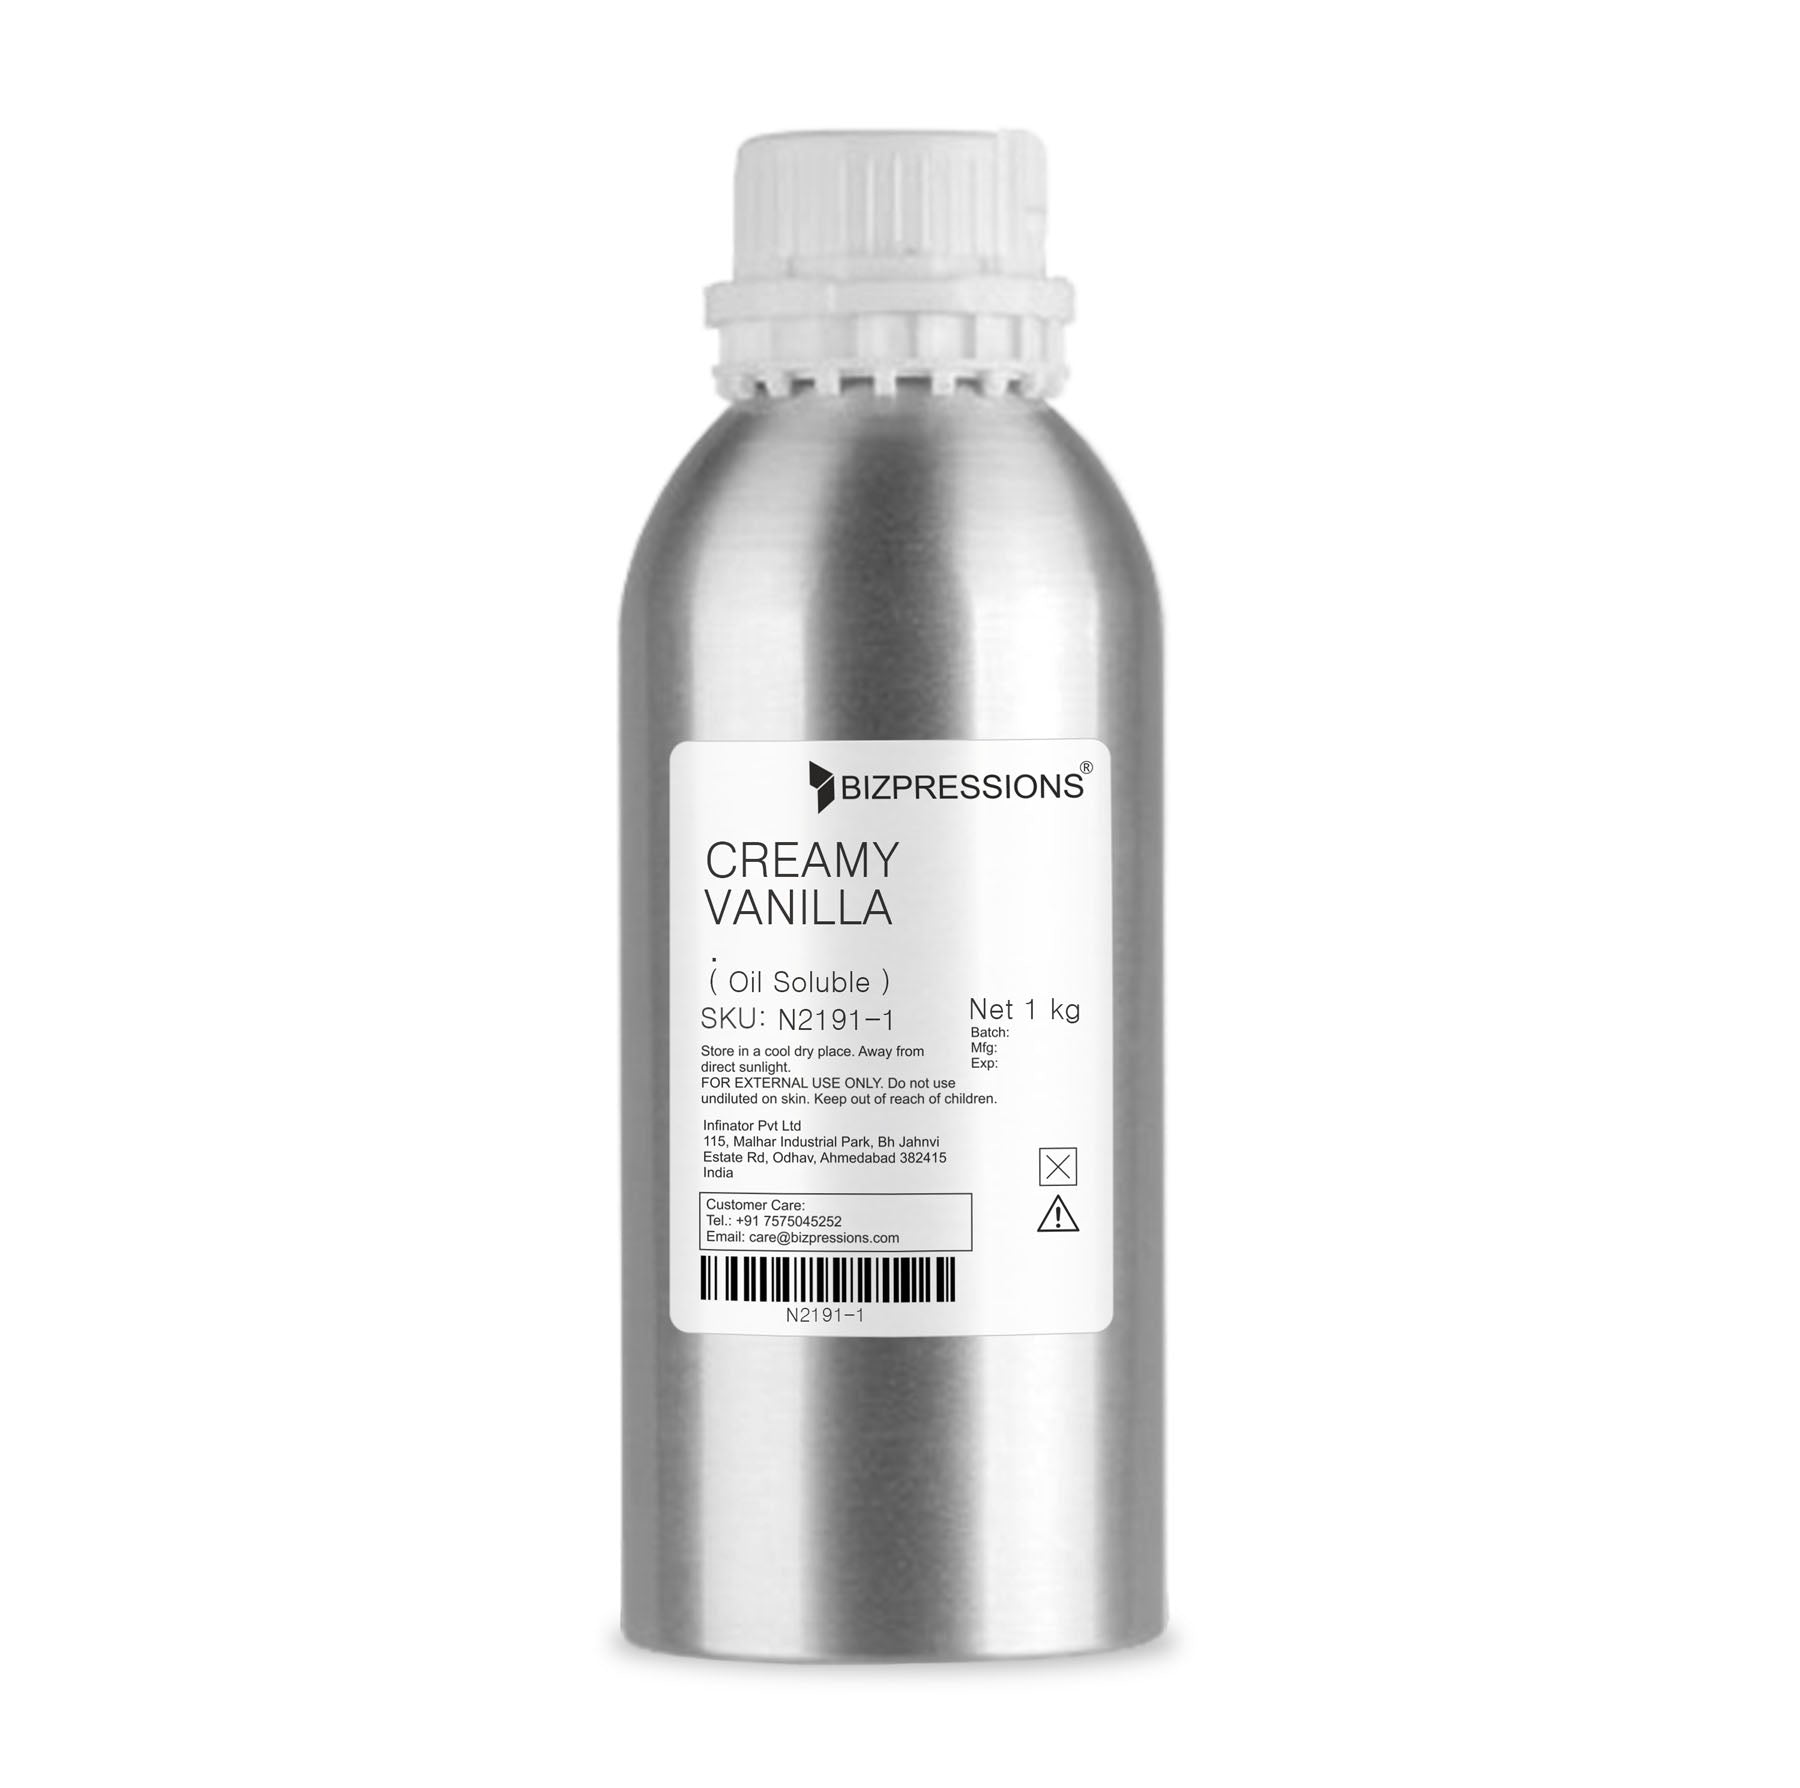 CREAMY VANILLA - Fragrance ( Oil Soluble ) - 1 kg